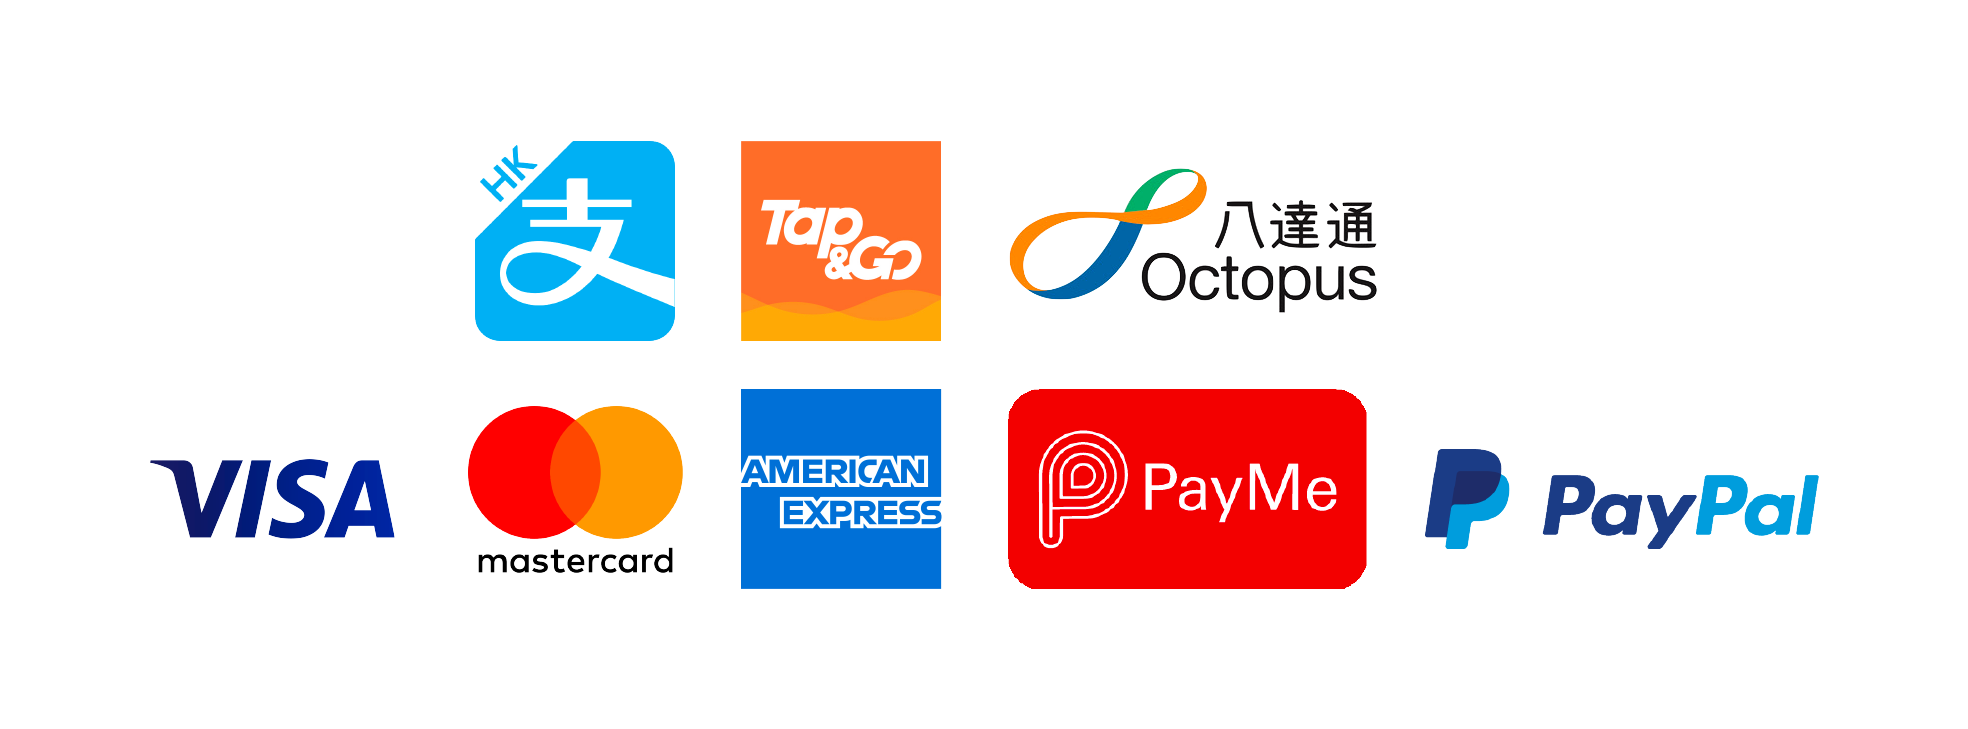 Octopus八達通消費券/AlipayHK支付寶消費券/Tap&Go消費券/Visa/Mastercard/American Express/PayMe/PayPal付款